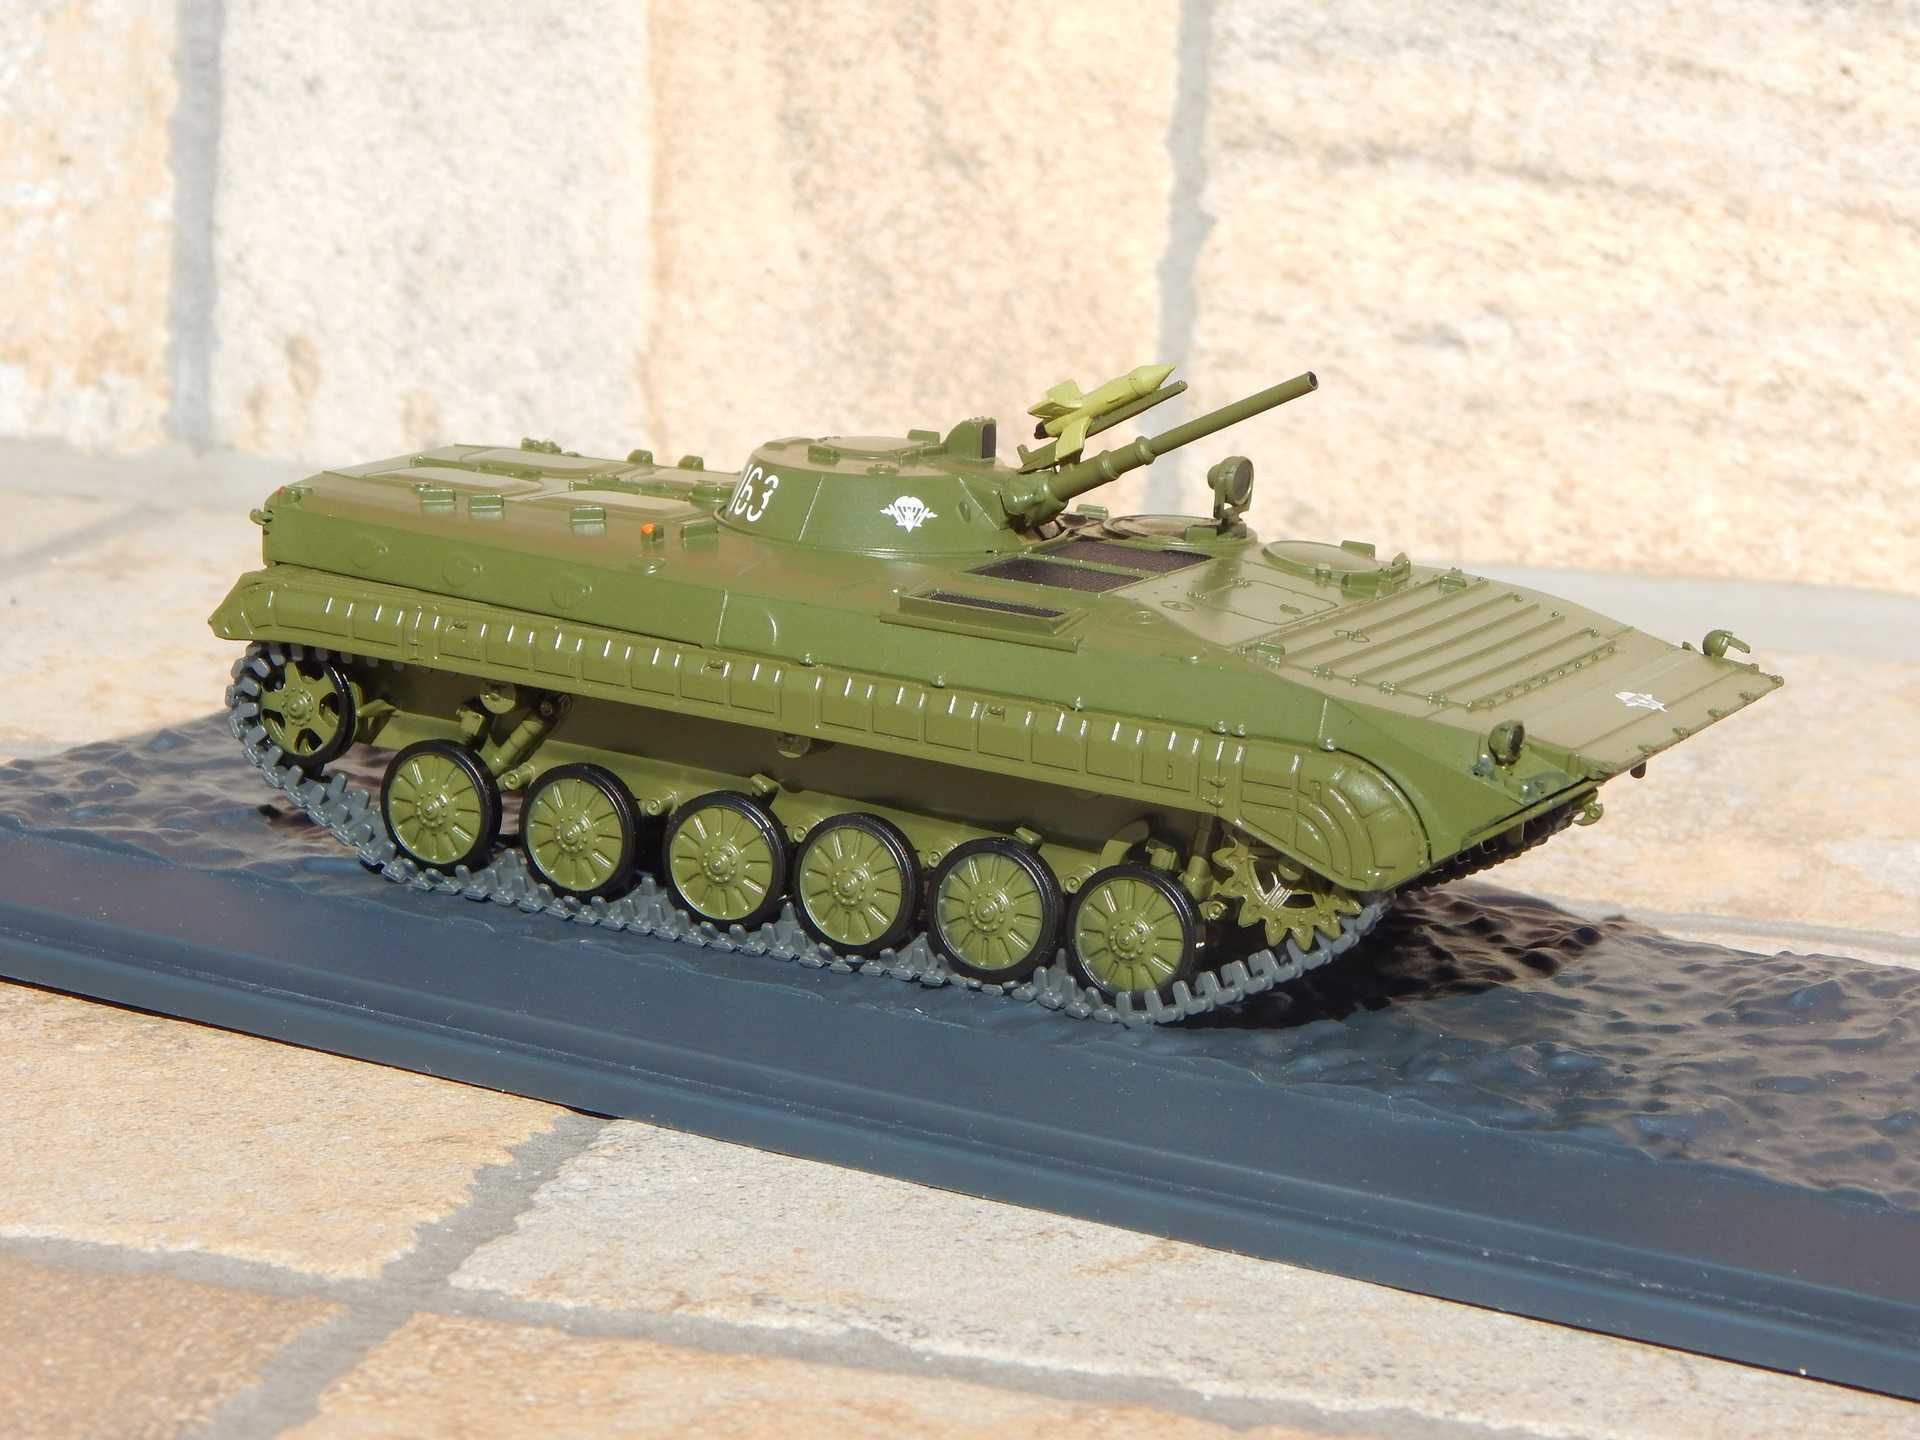 Macheta tanc transportor amfibiu blindat infanterie BMP-1 1966 sc 1:43